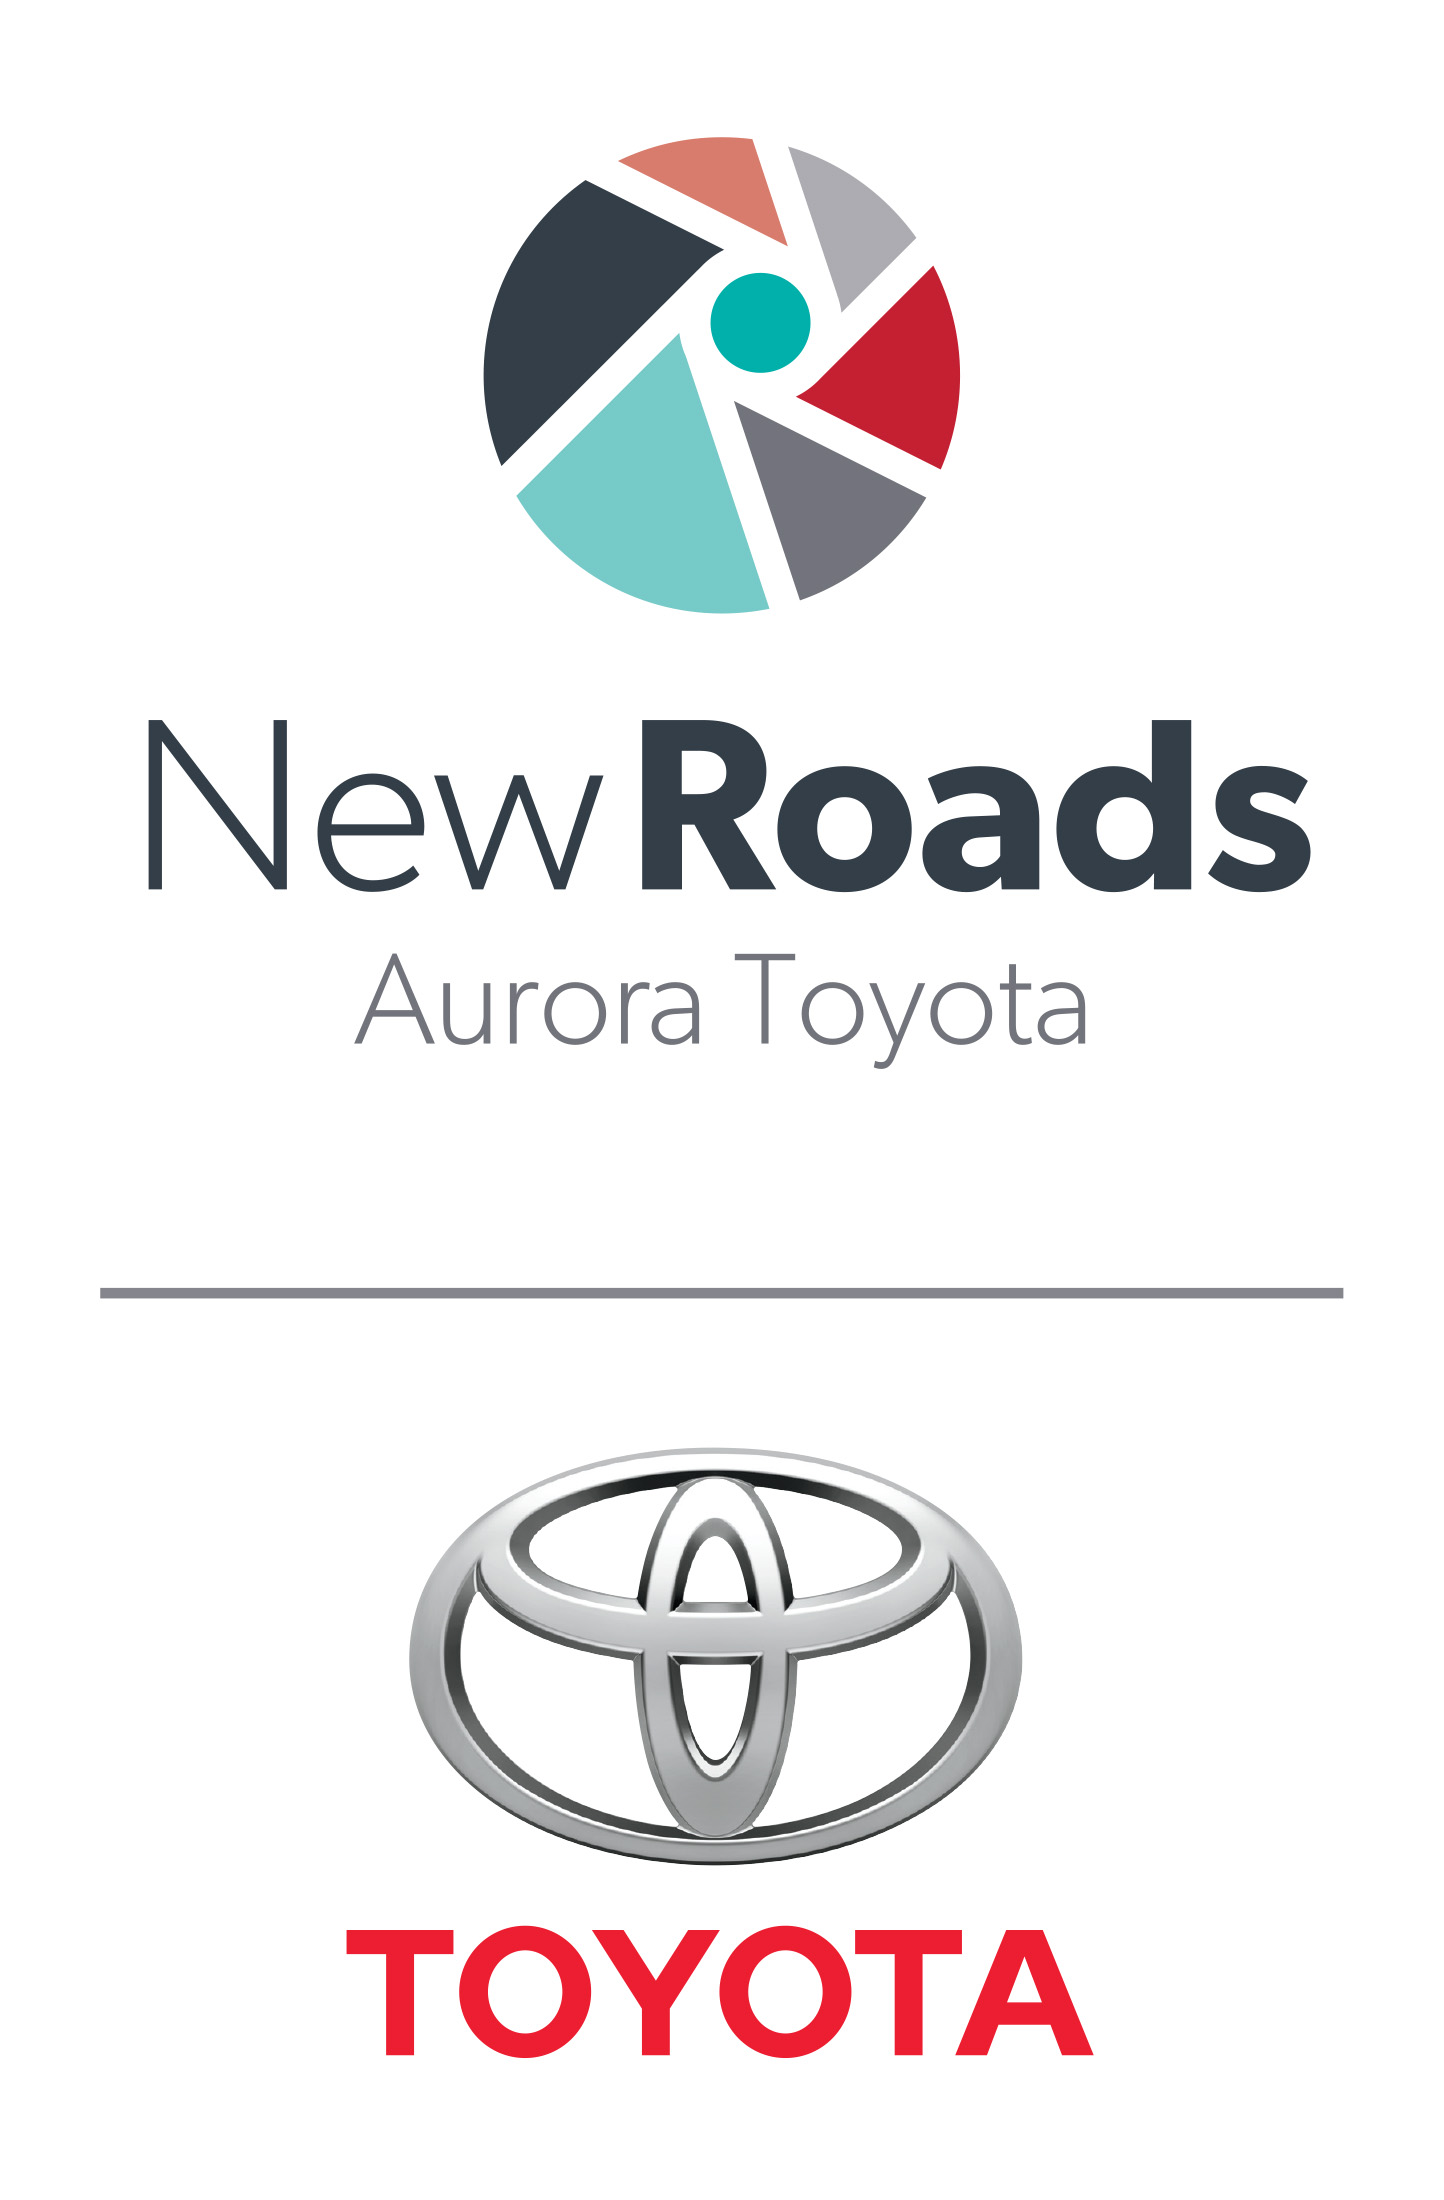 NewRoads Aurora Toyota